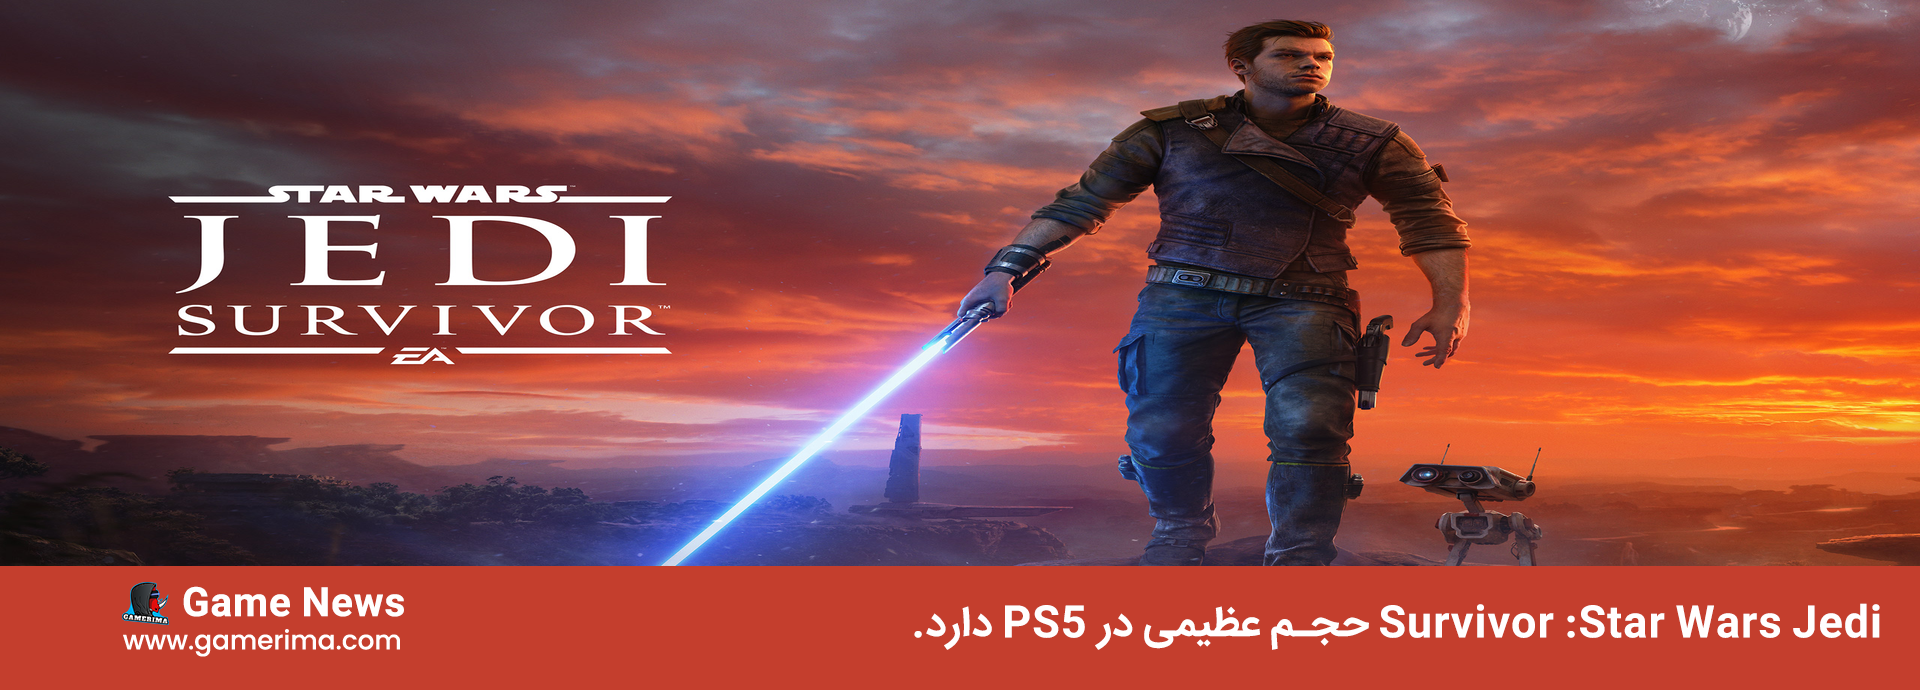 Survivor :Star Wars Jedi حجم عظیمی در PS5 دارد.